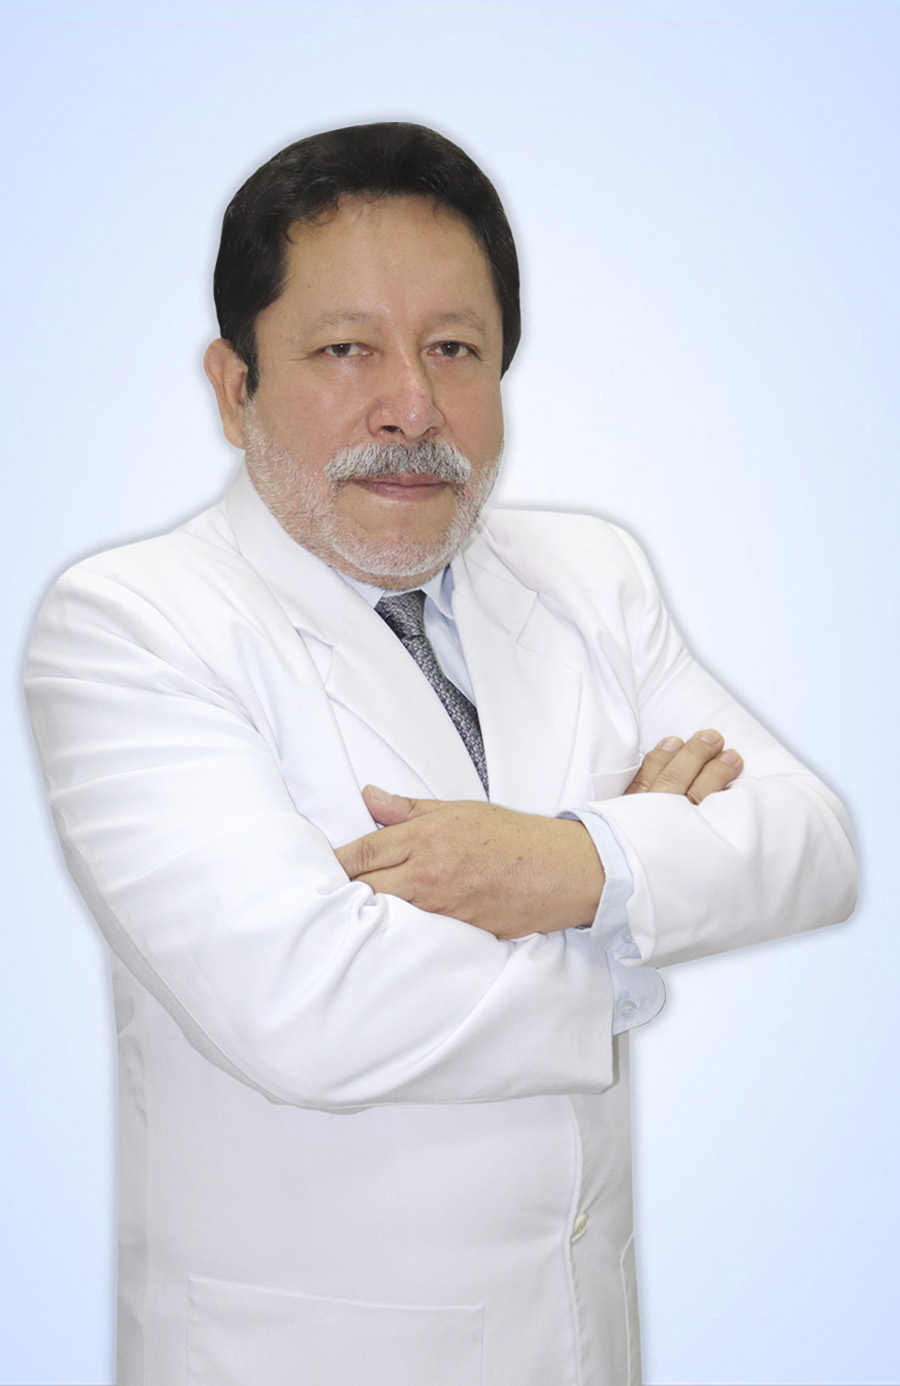 DR. RODRIGUEZ ABURTO